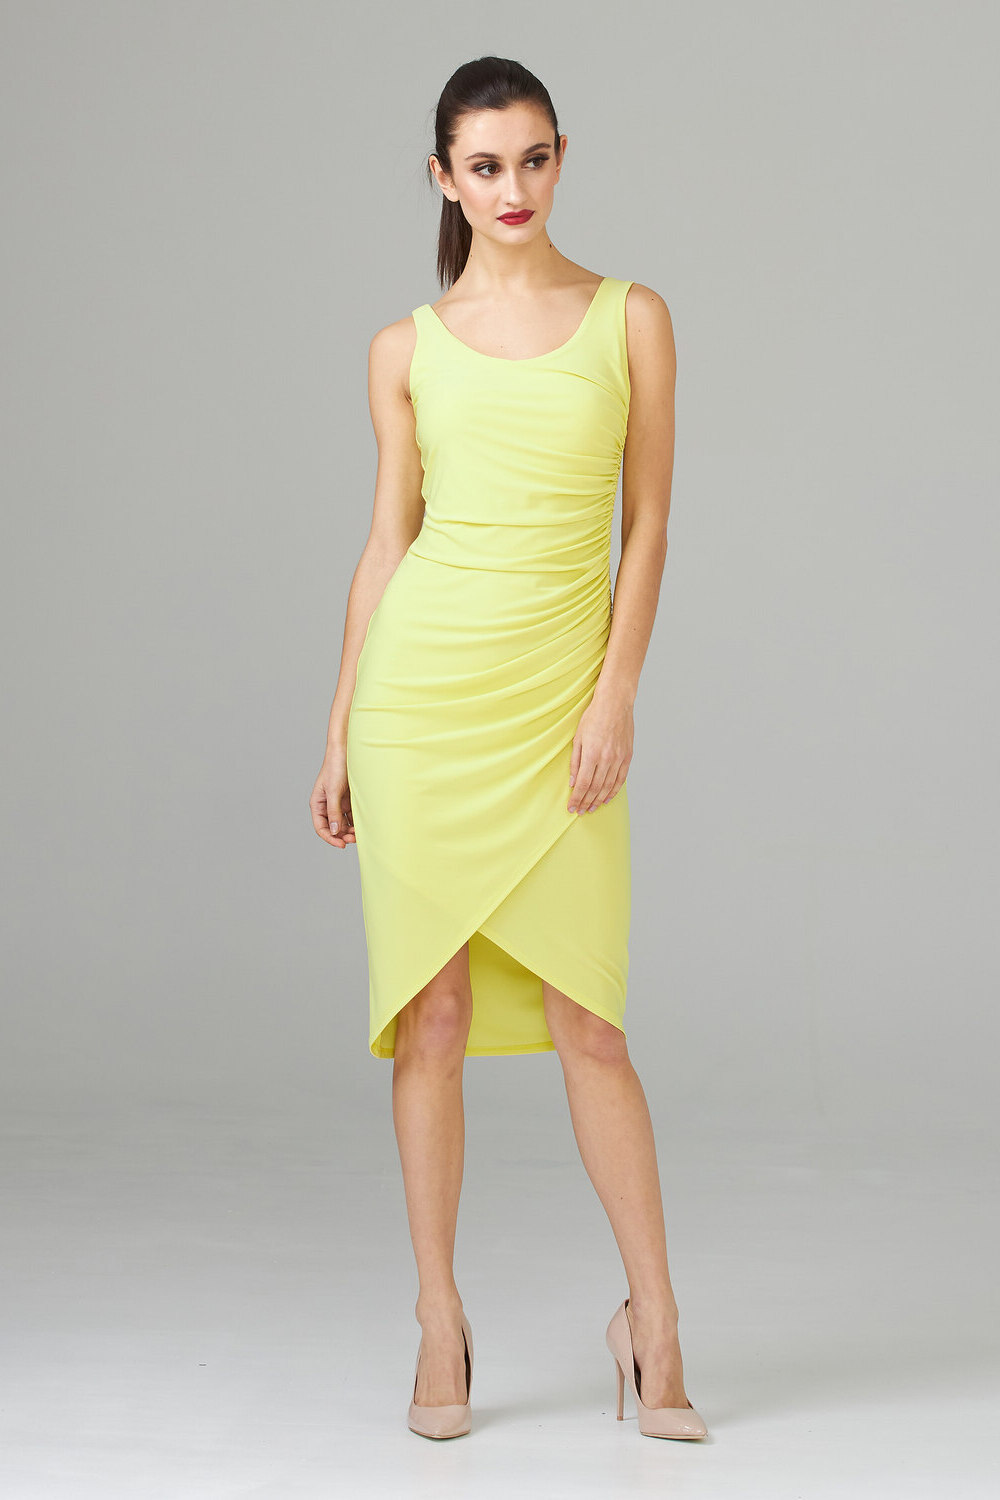 Joseph Ribkoff Dress Style 201189. Zest